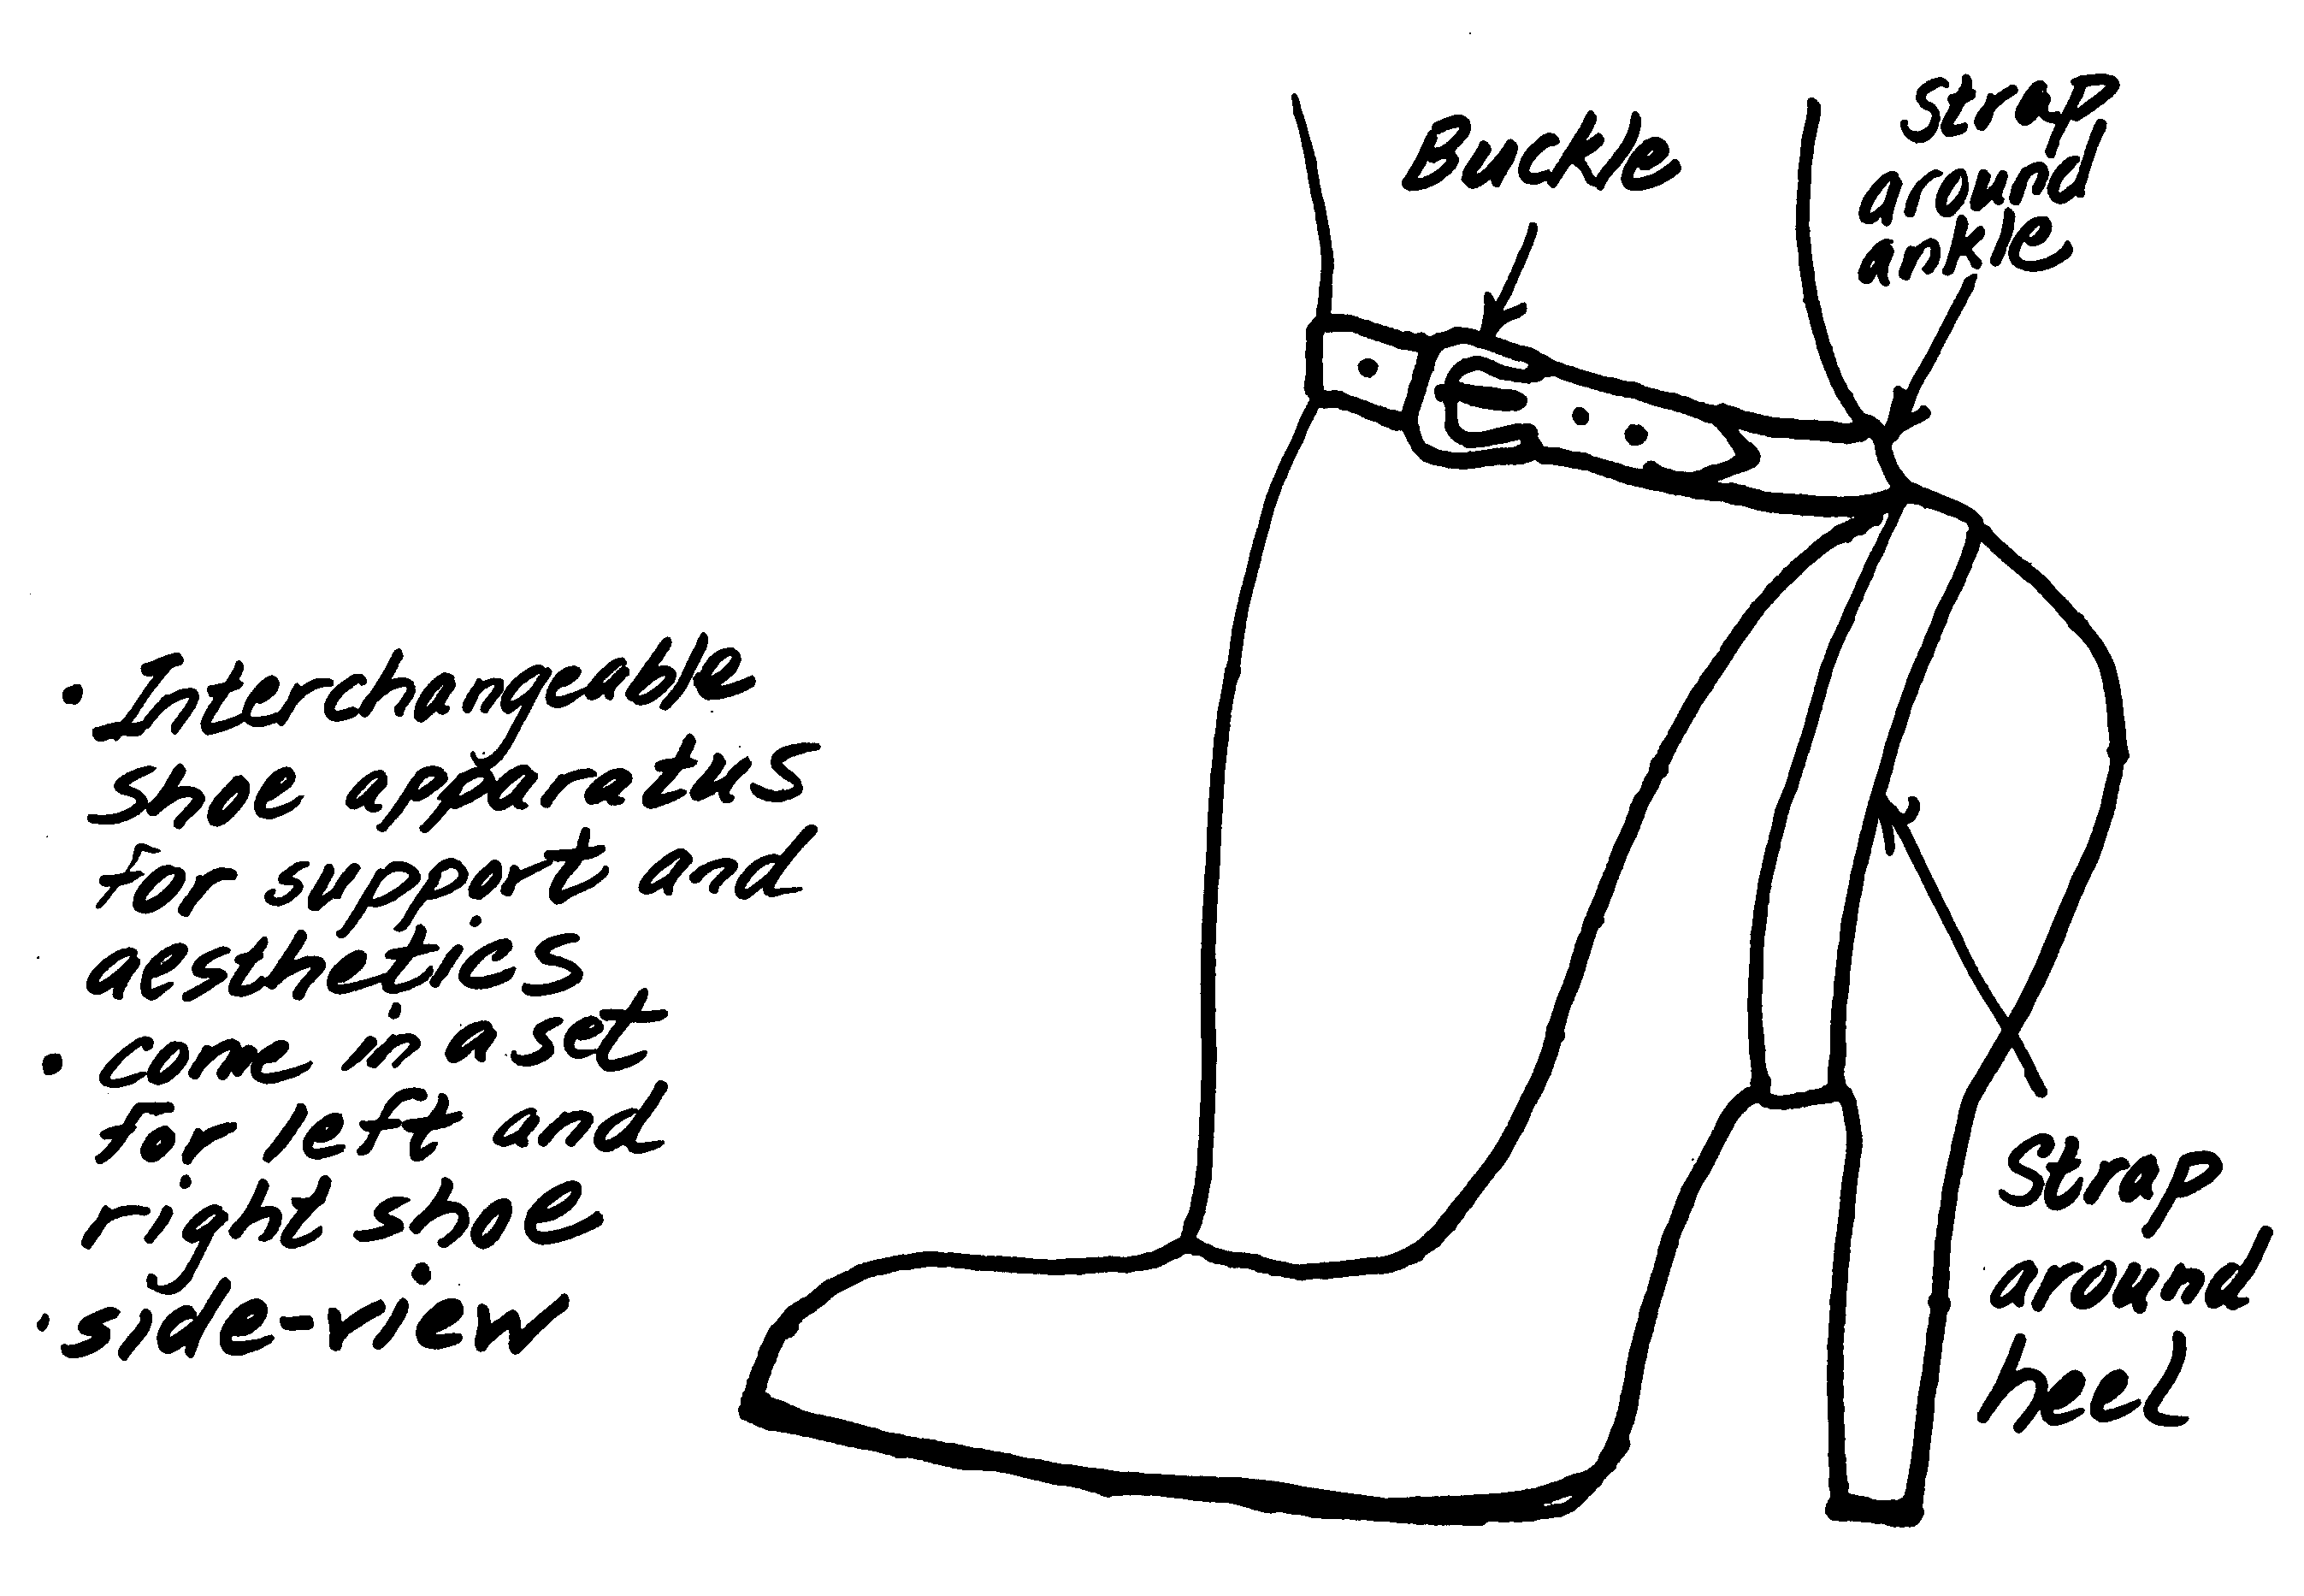 FairyJanes:  "The Suspender for Stilettos"